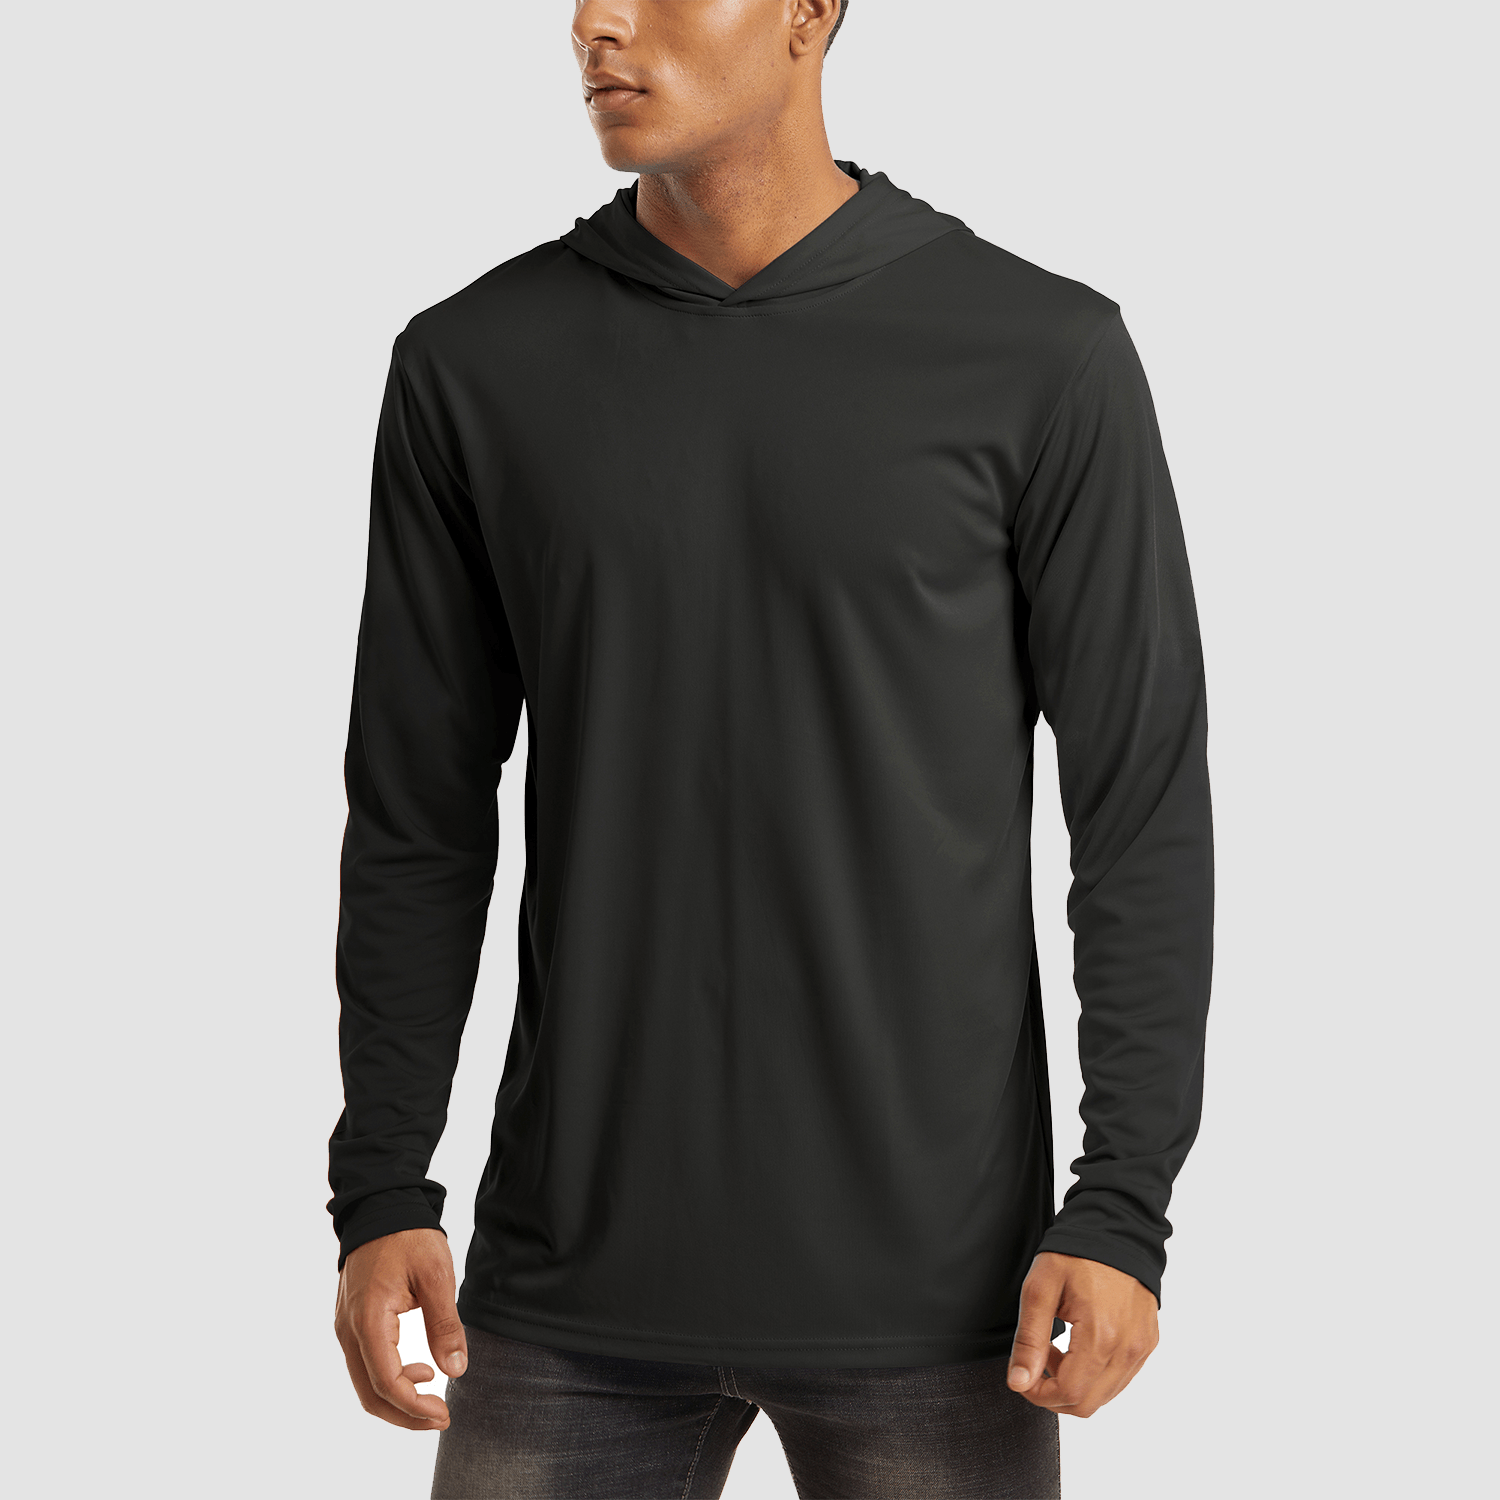 【Buy 4 Get 4th Free】Men's Long Sleeve Hooded Shirt UPF 50+ Athletic Shirts